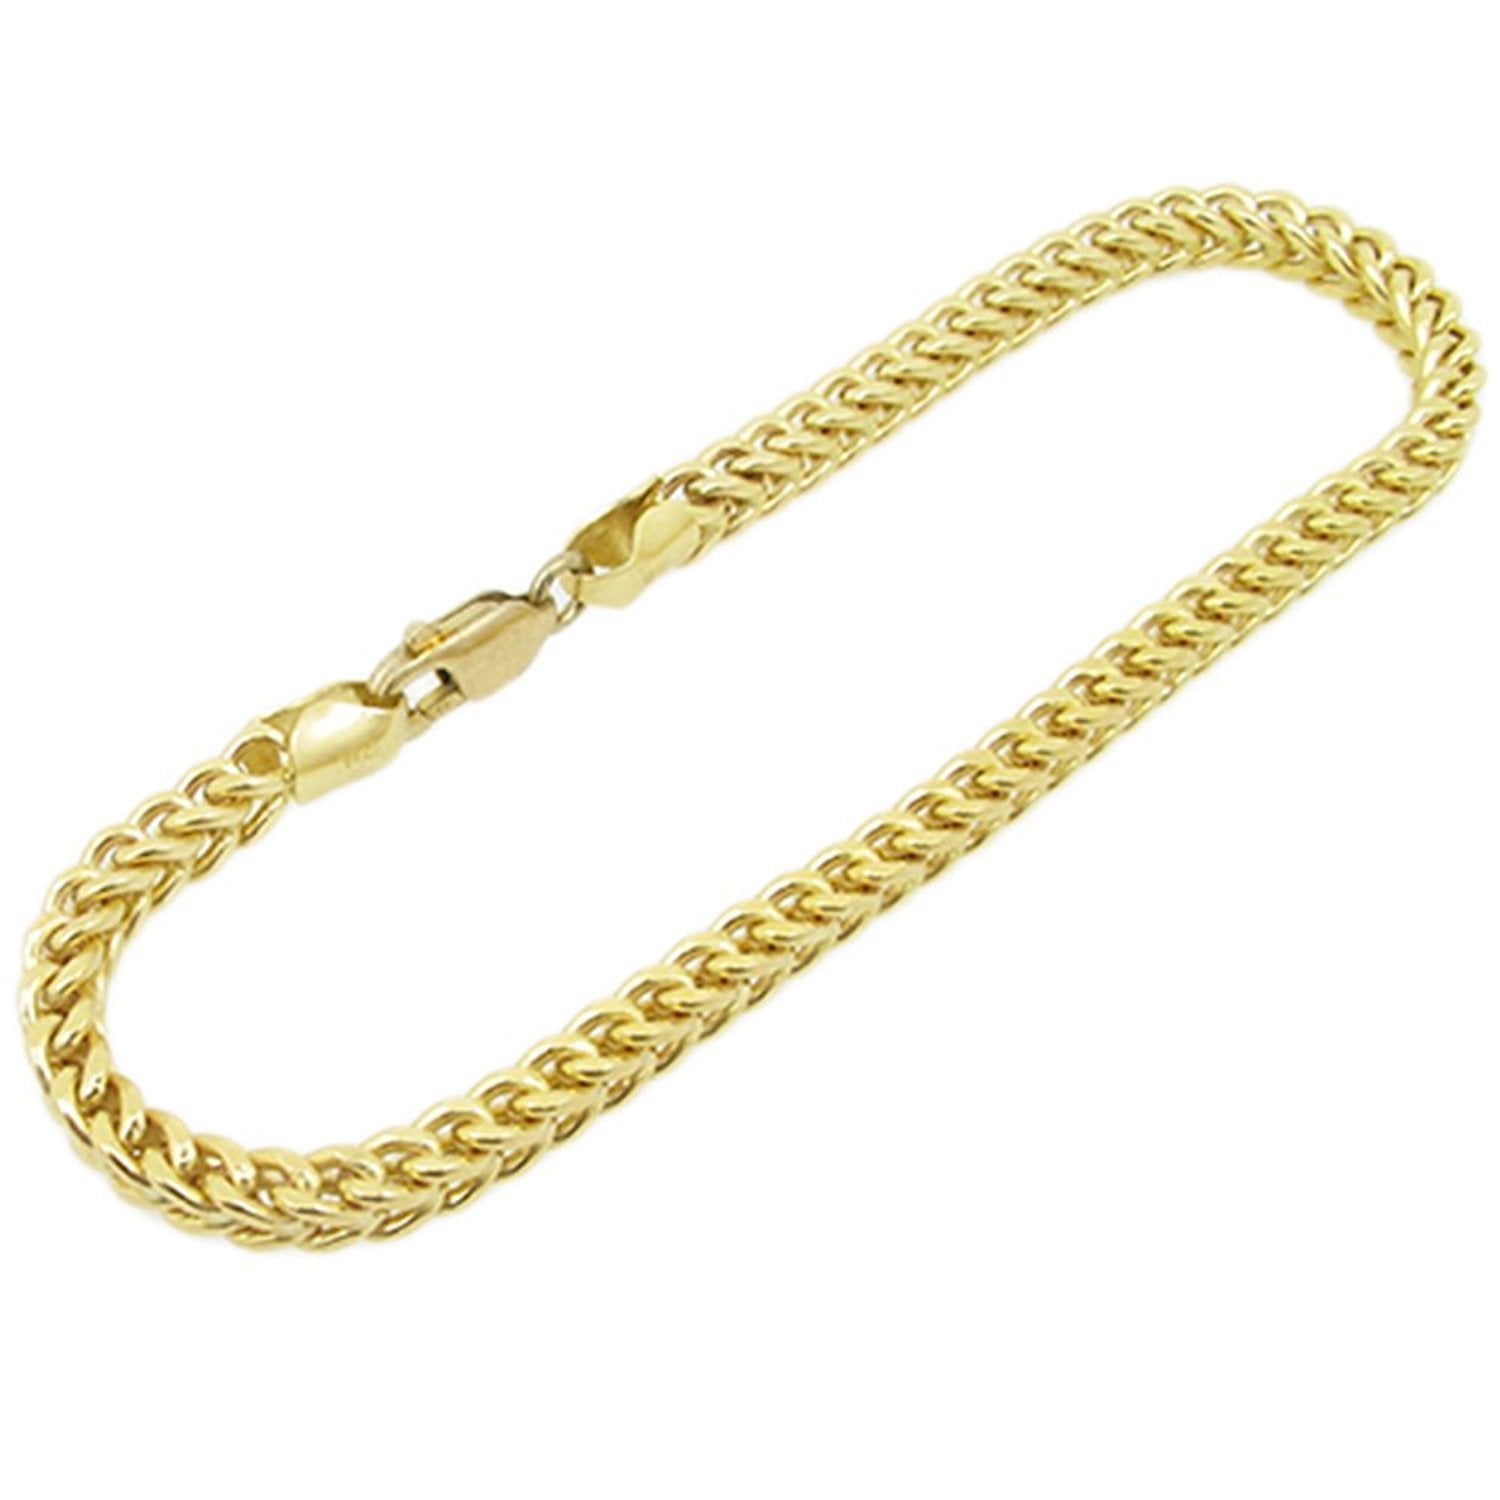 Gold Franco Bracelet 24.8g